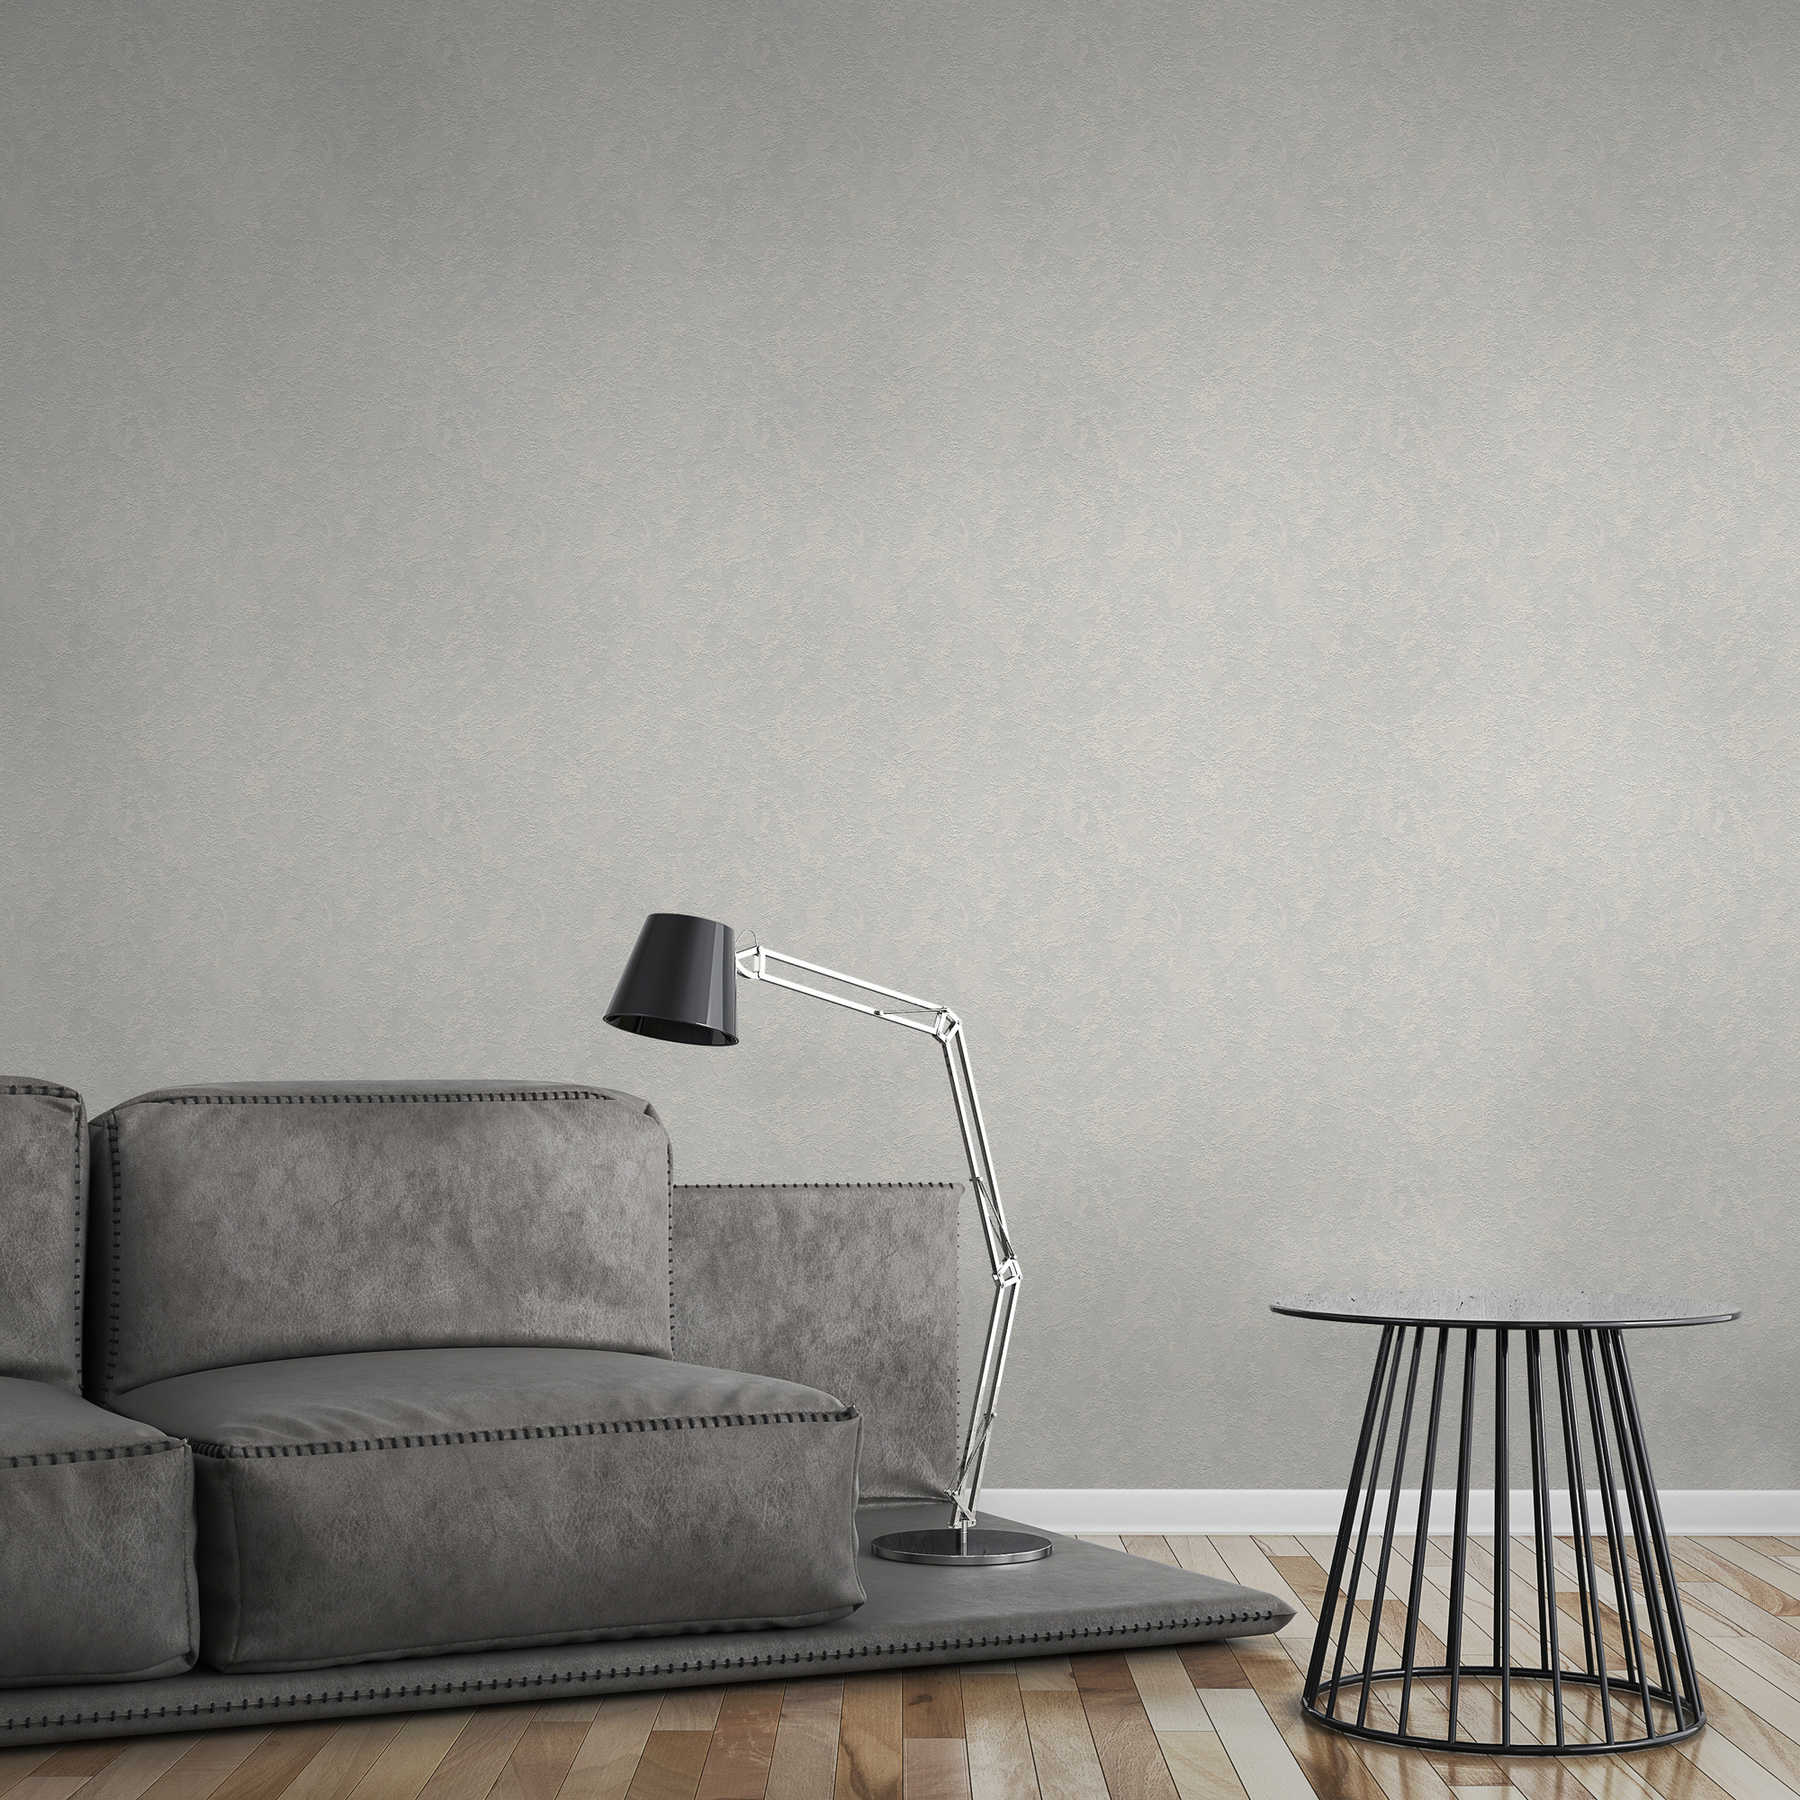             Plain wallpaper with plaster texture - white
        